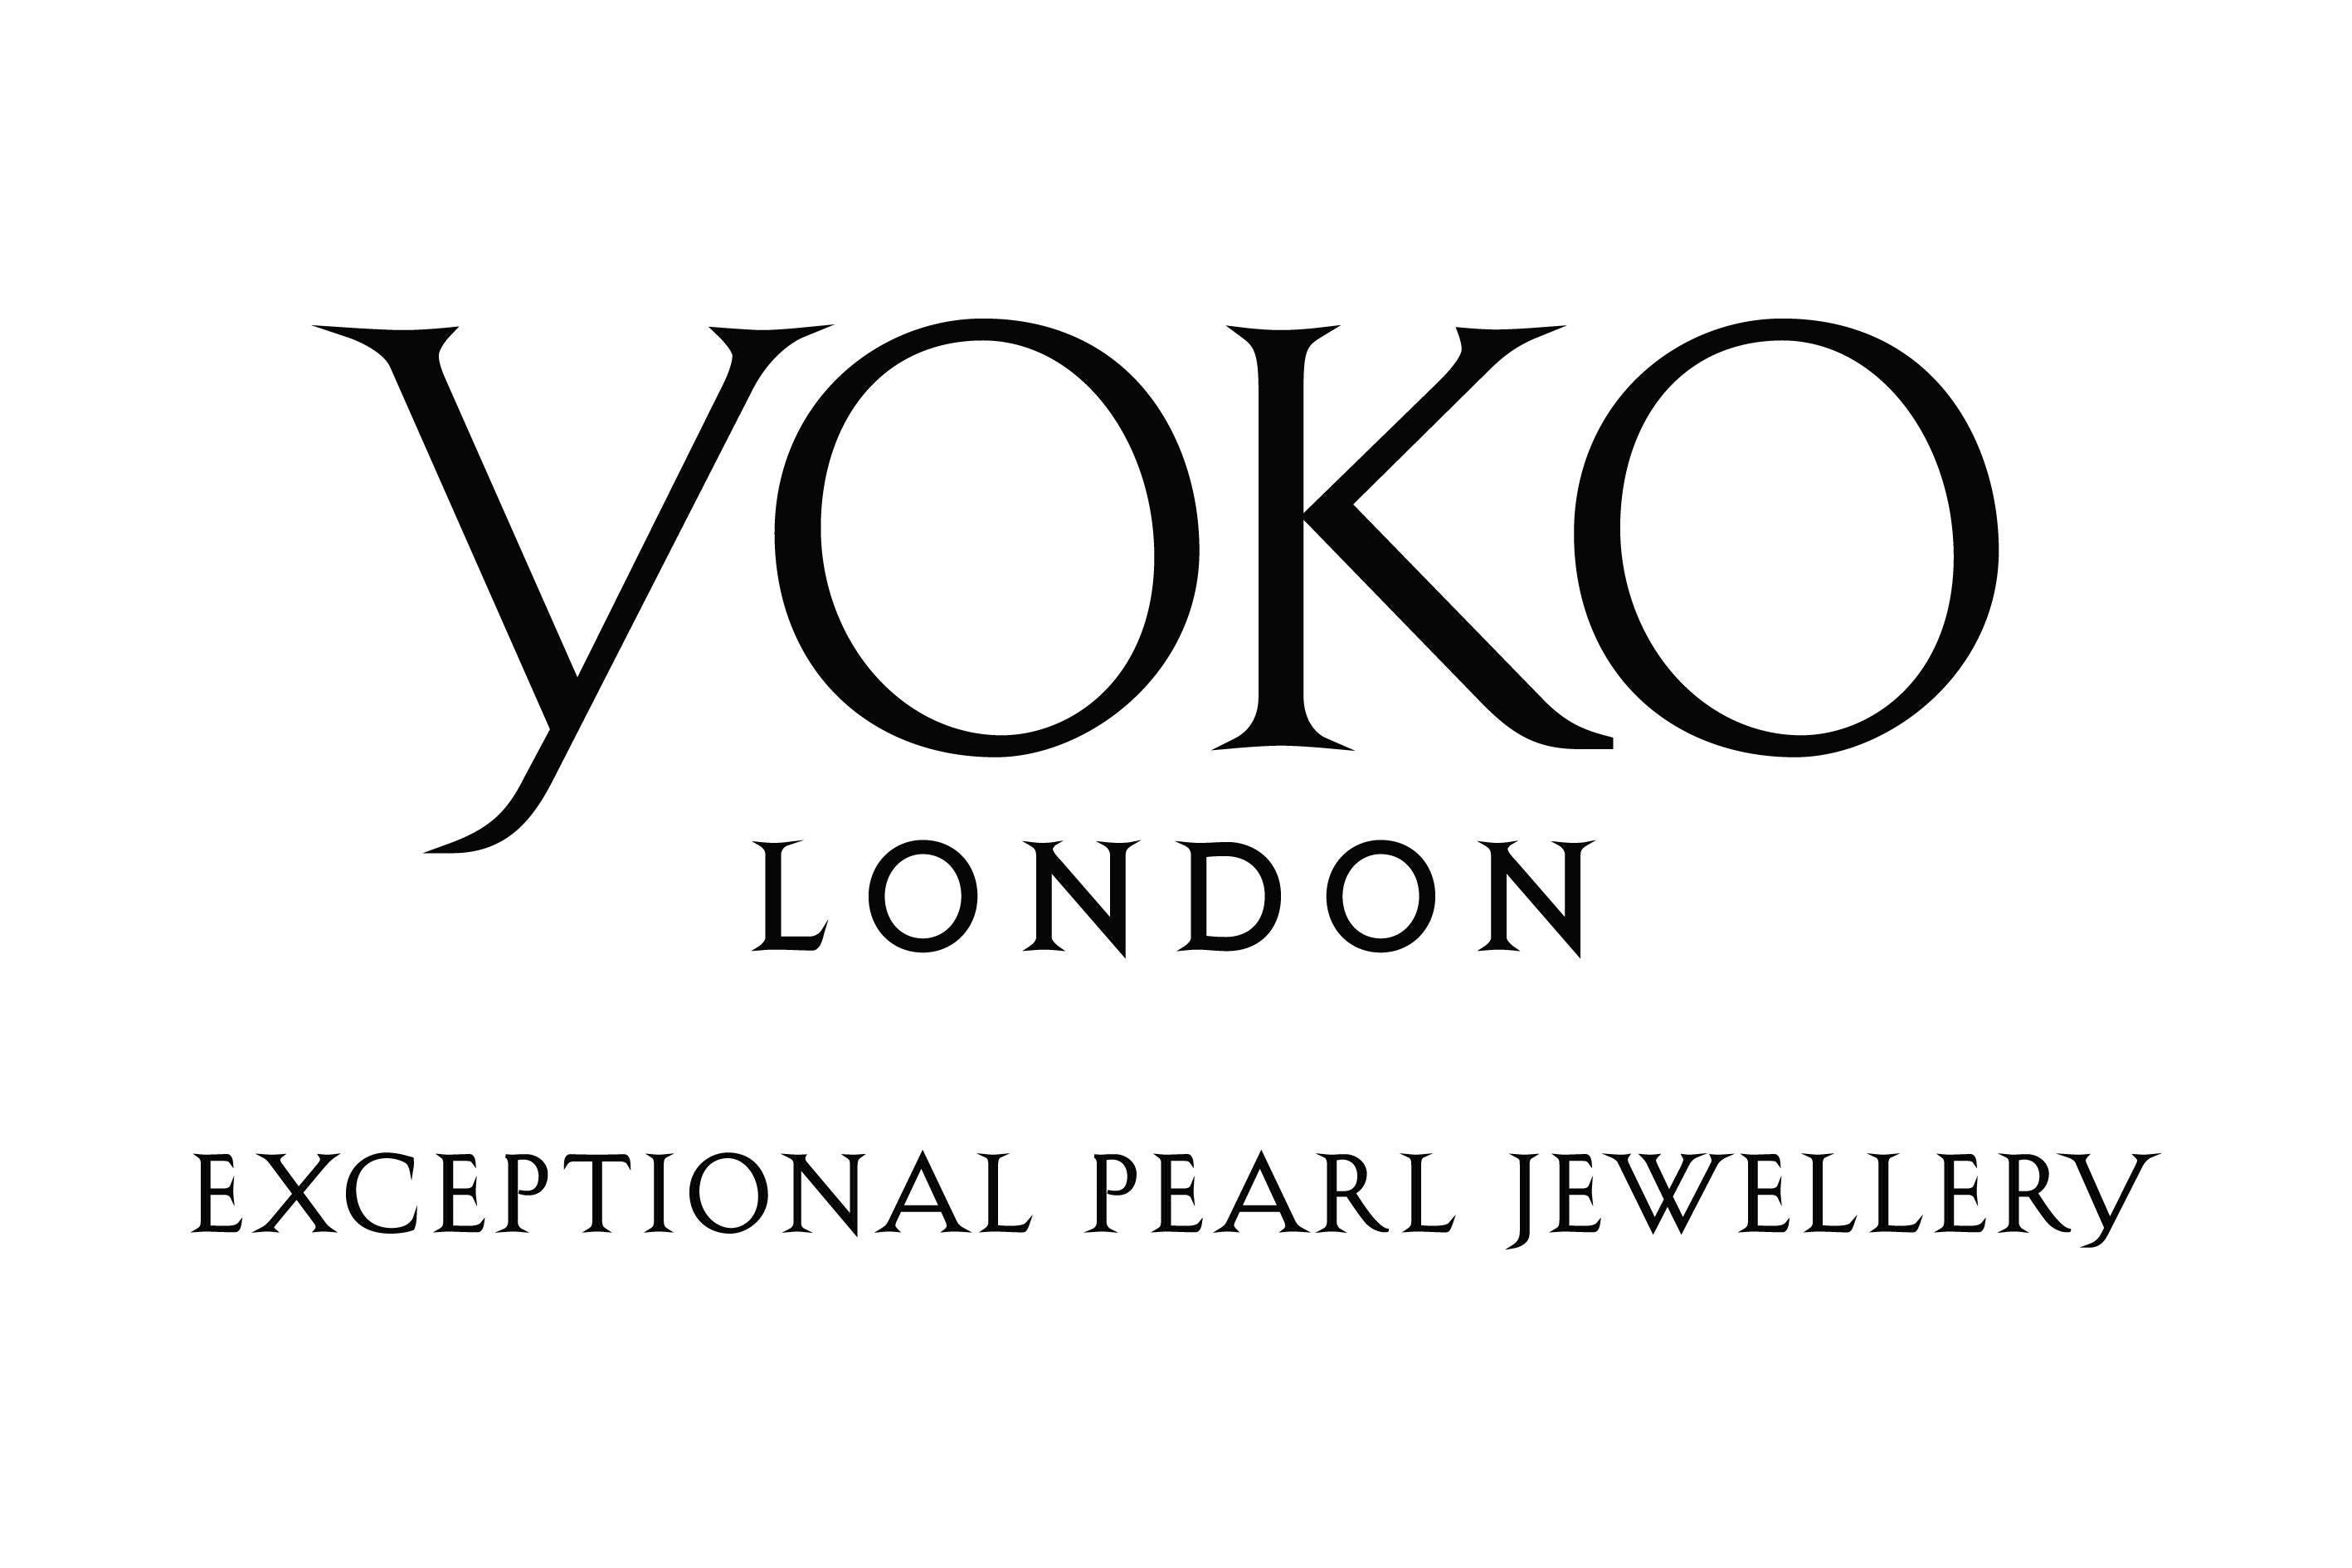 Yoko London South Sea Pearls and Diamond Earrings in 18 Karat White Gold 2